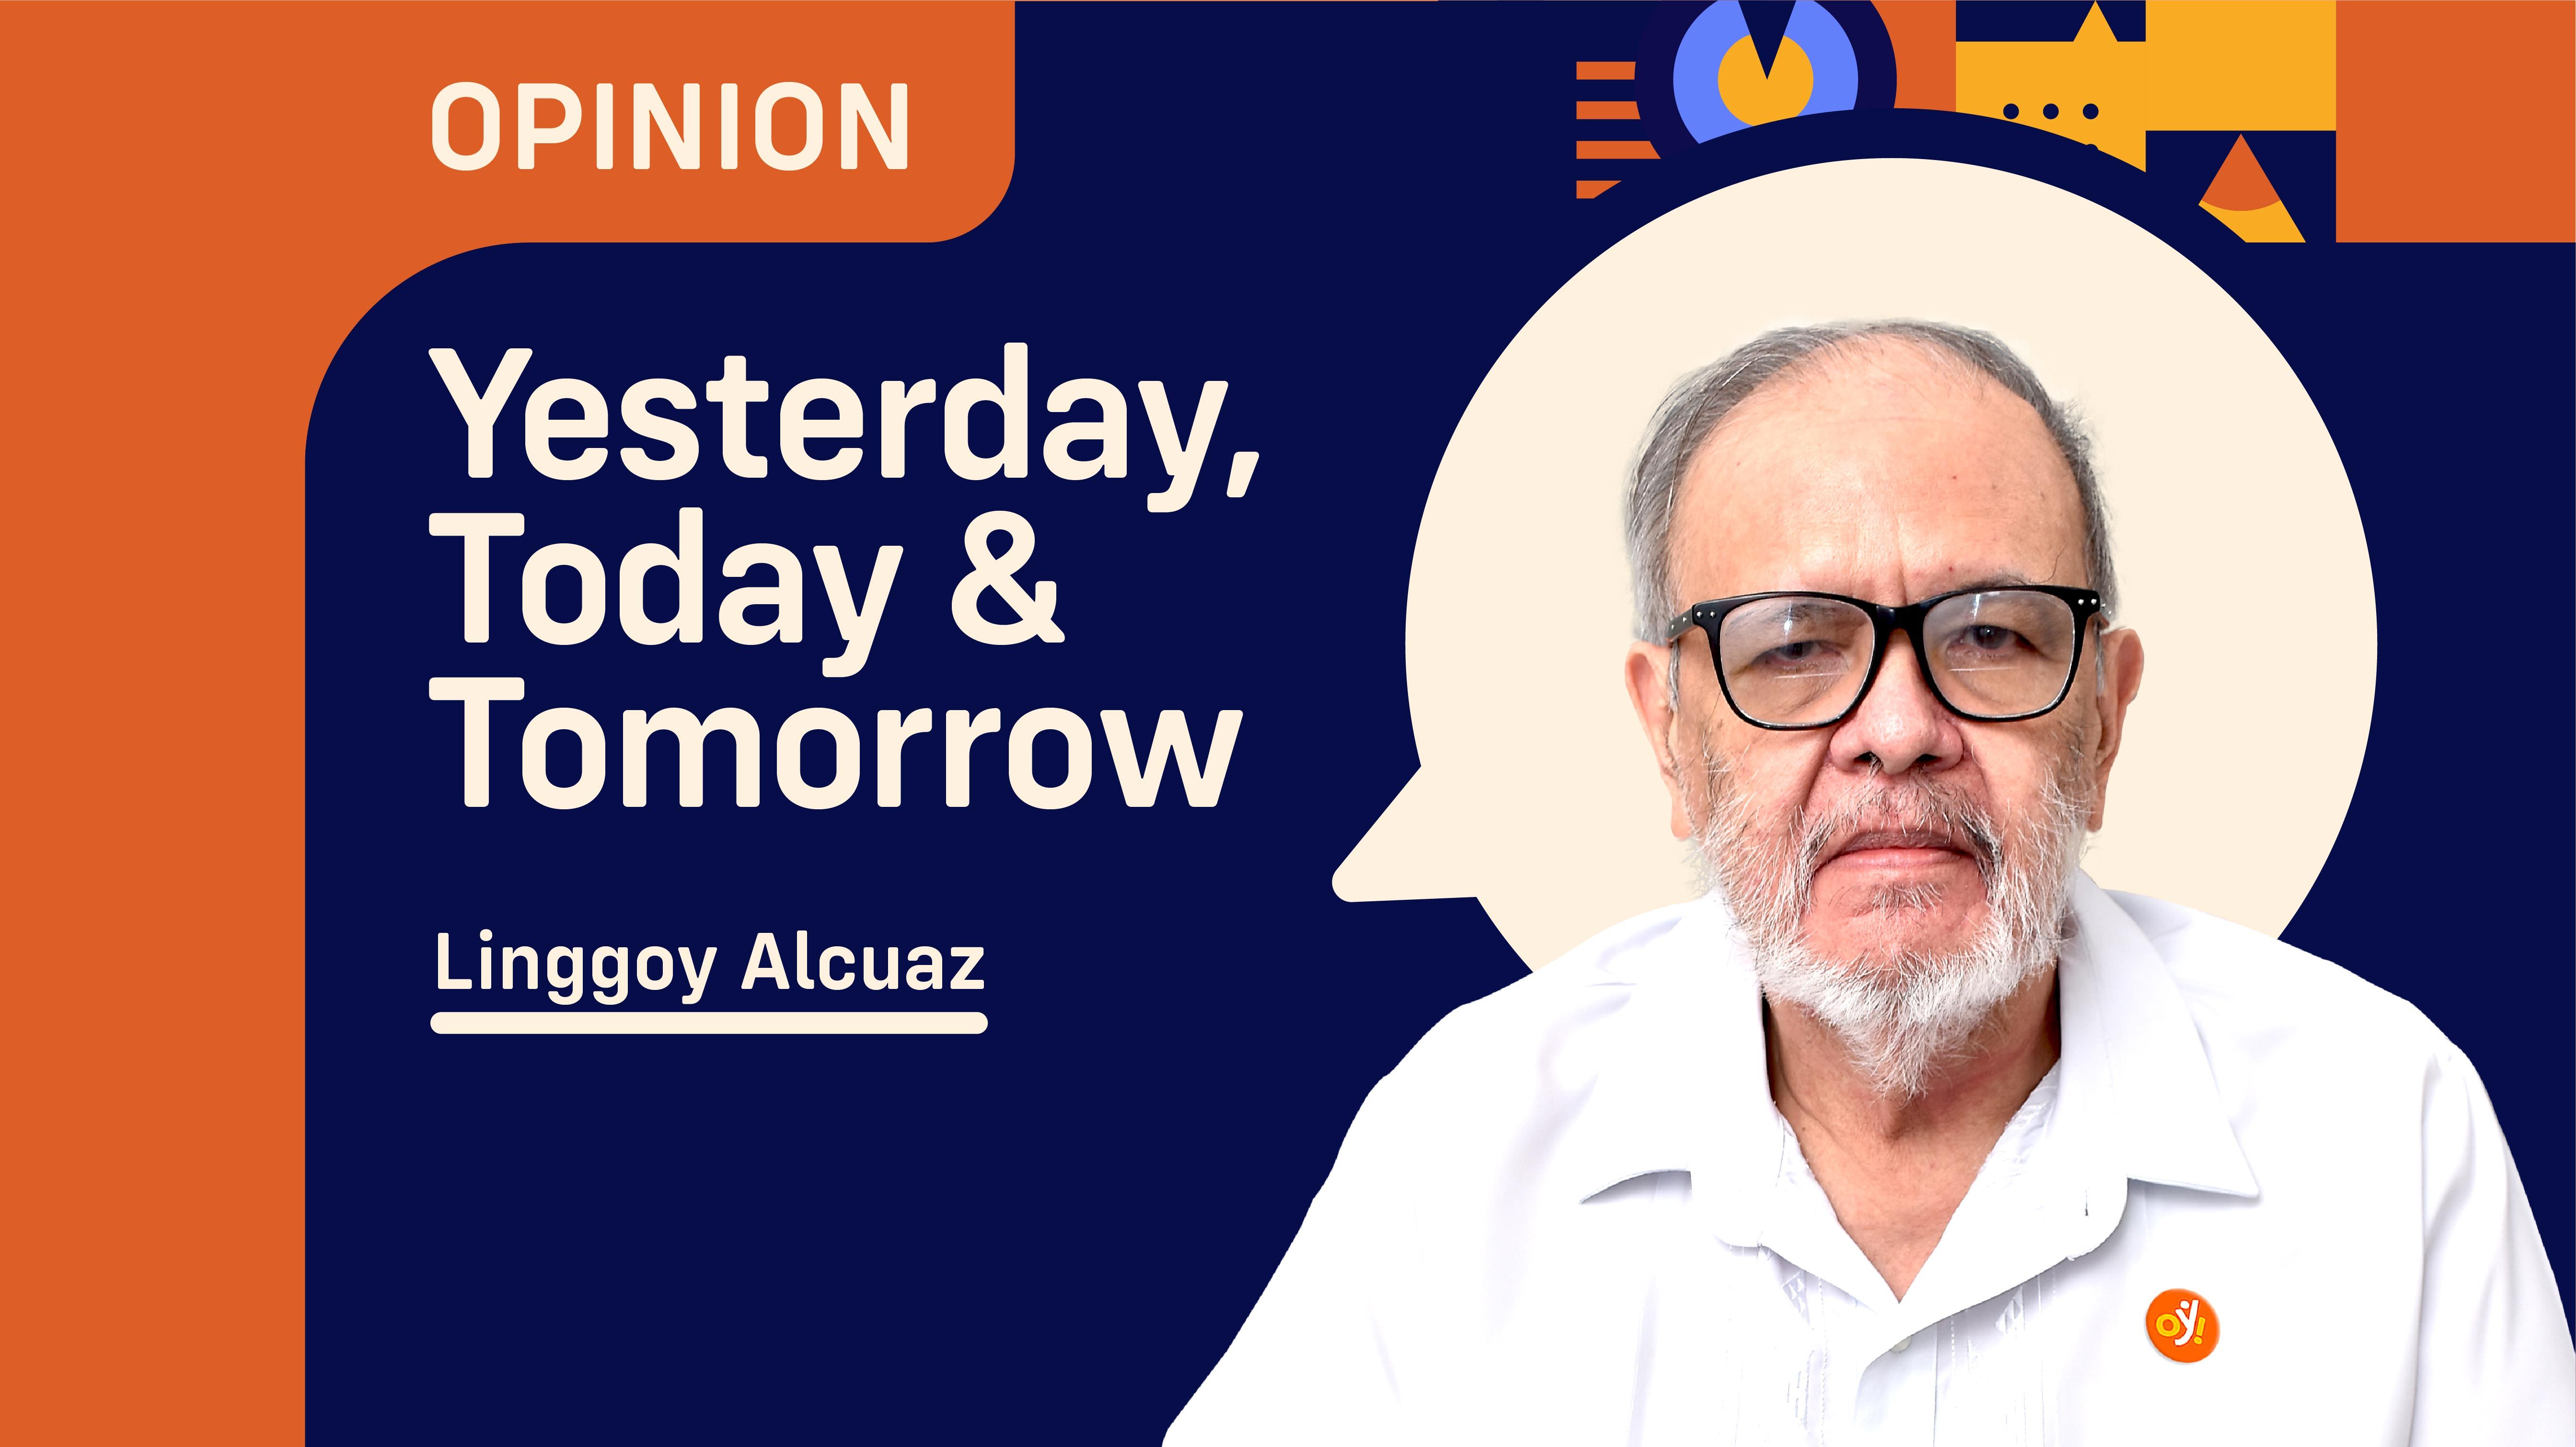 Yesterday, Today & Tomorrow by Linggoy Alcuaz